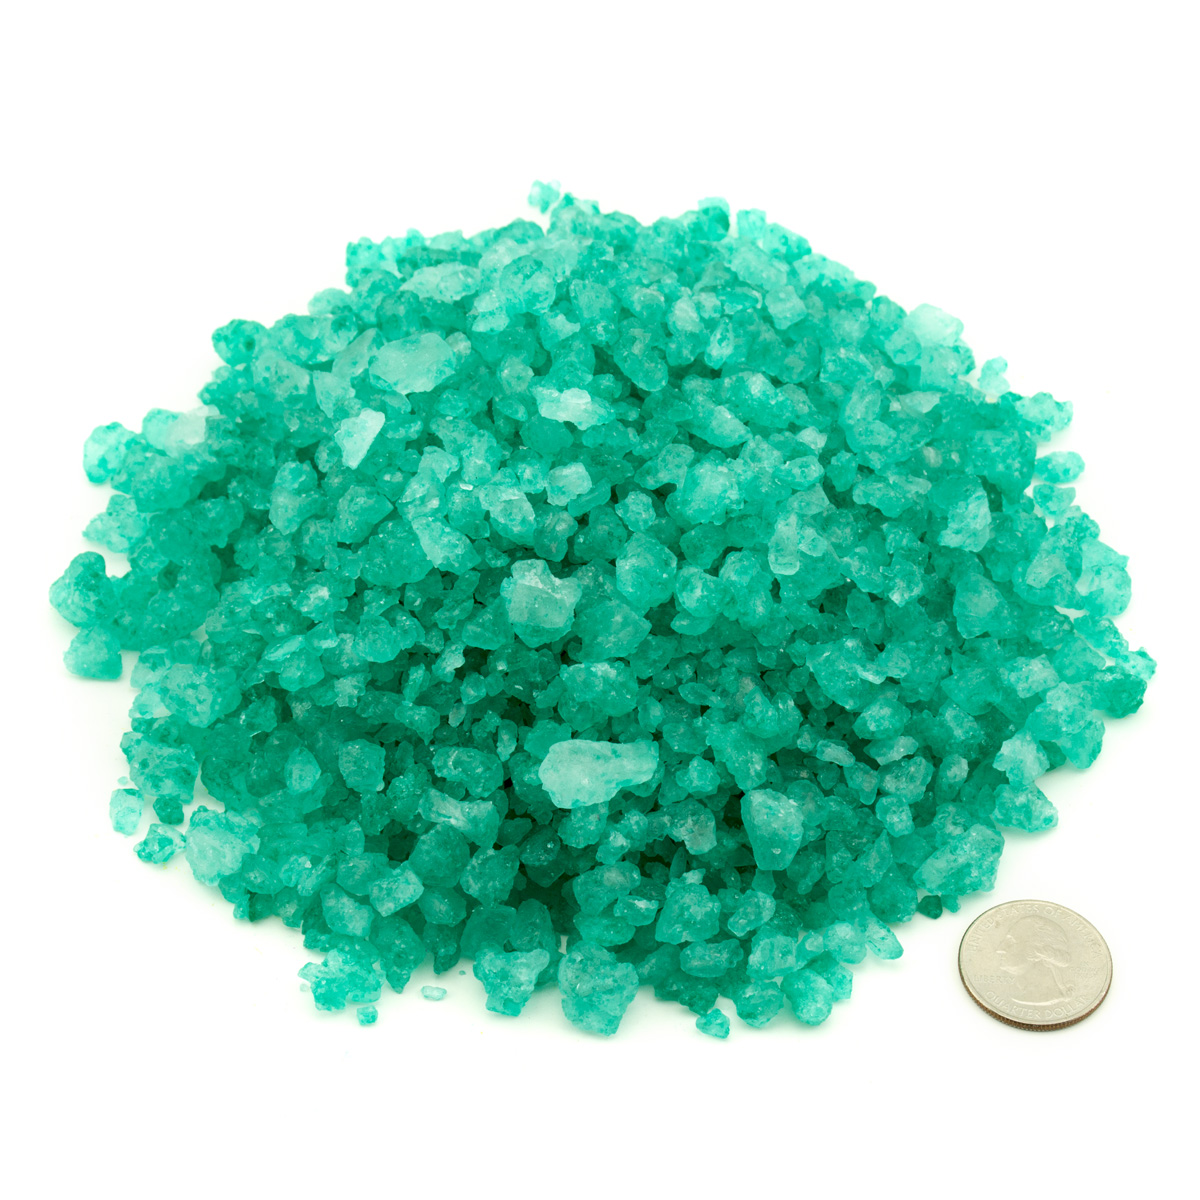 Aqua Blue/Cotton Candy Rock Candy Crystals